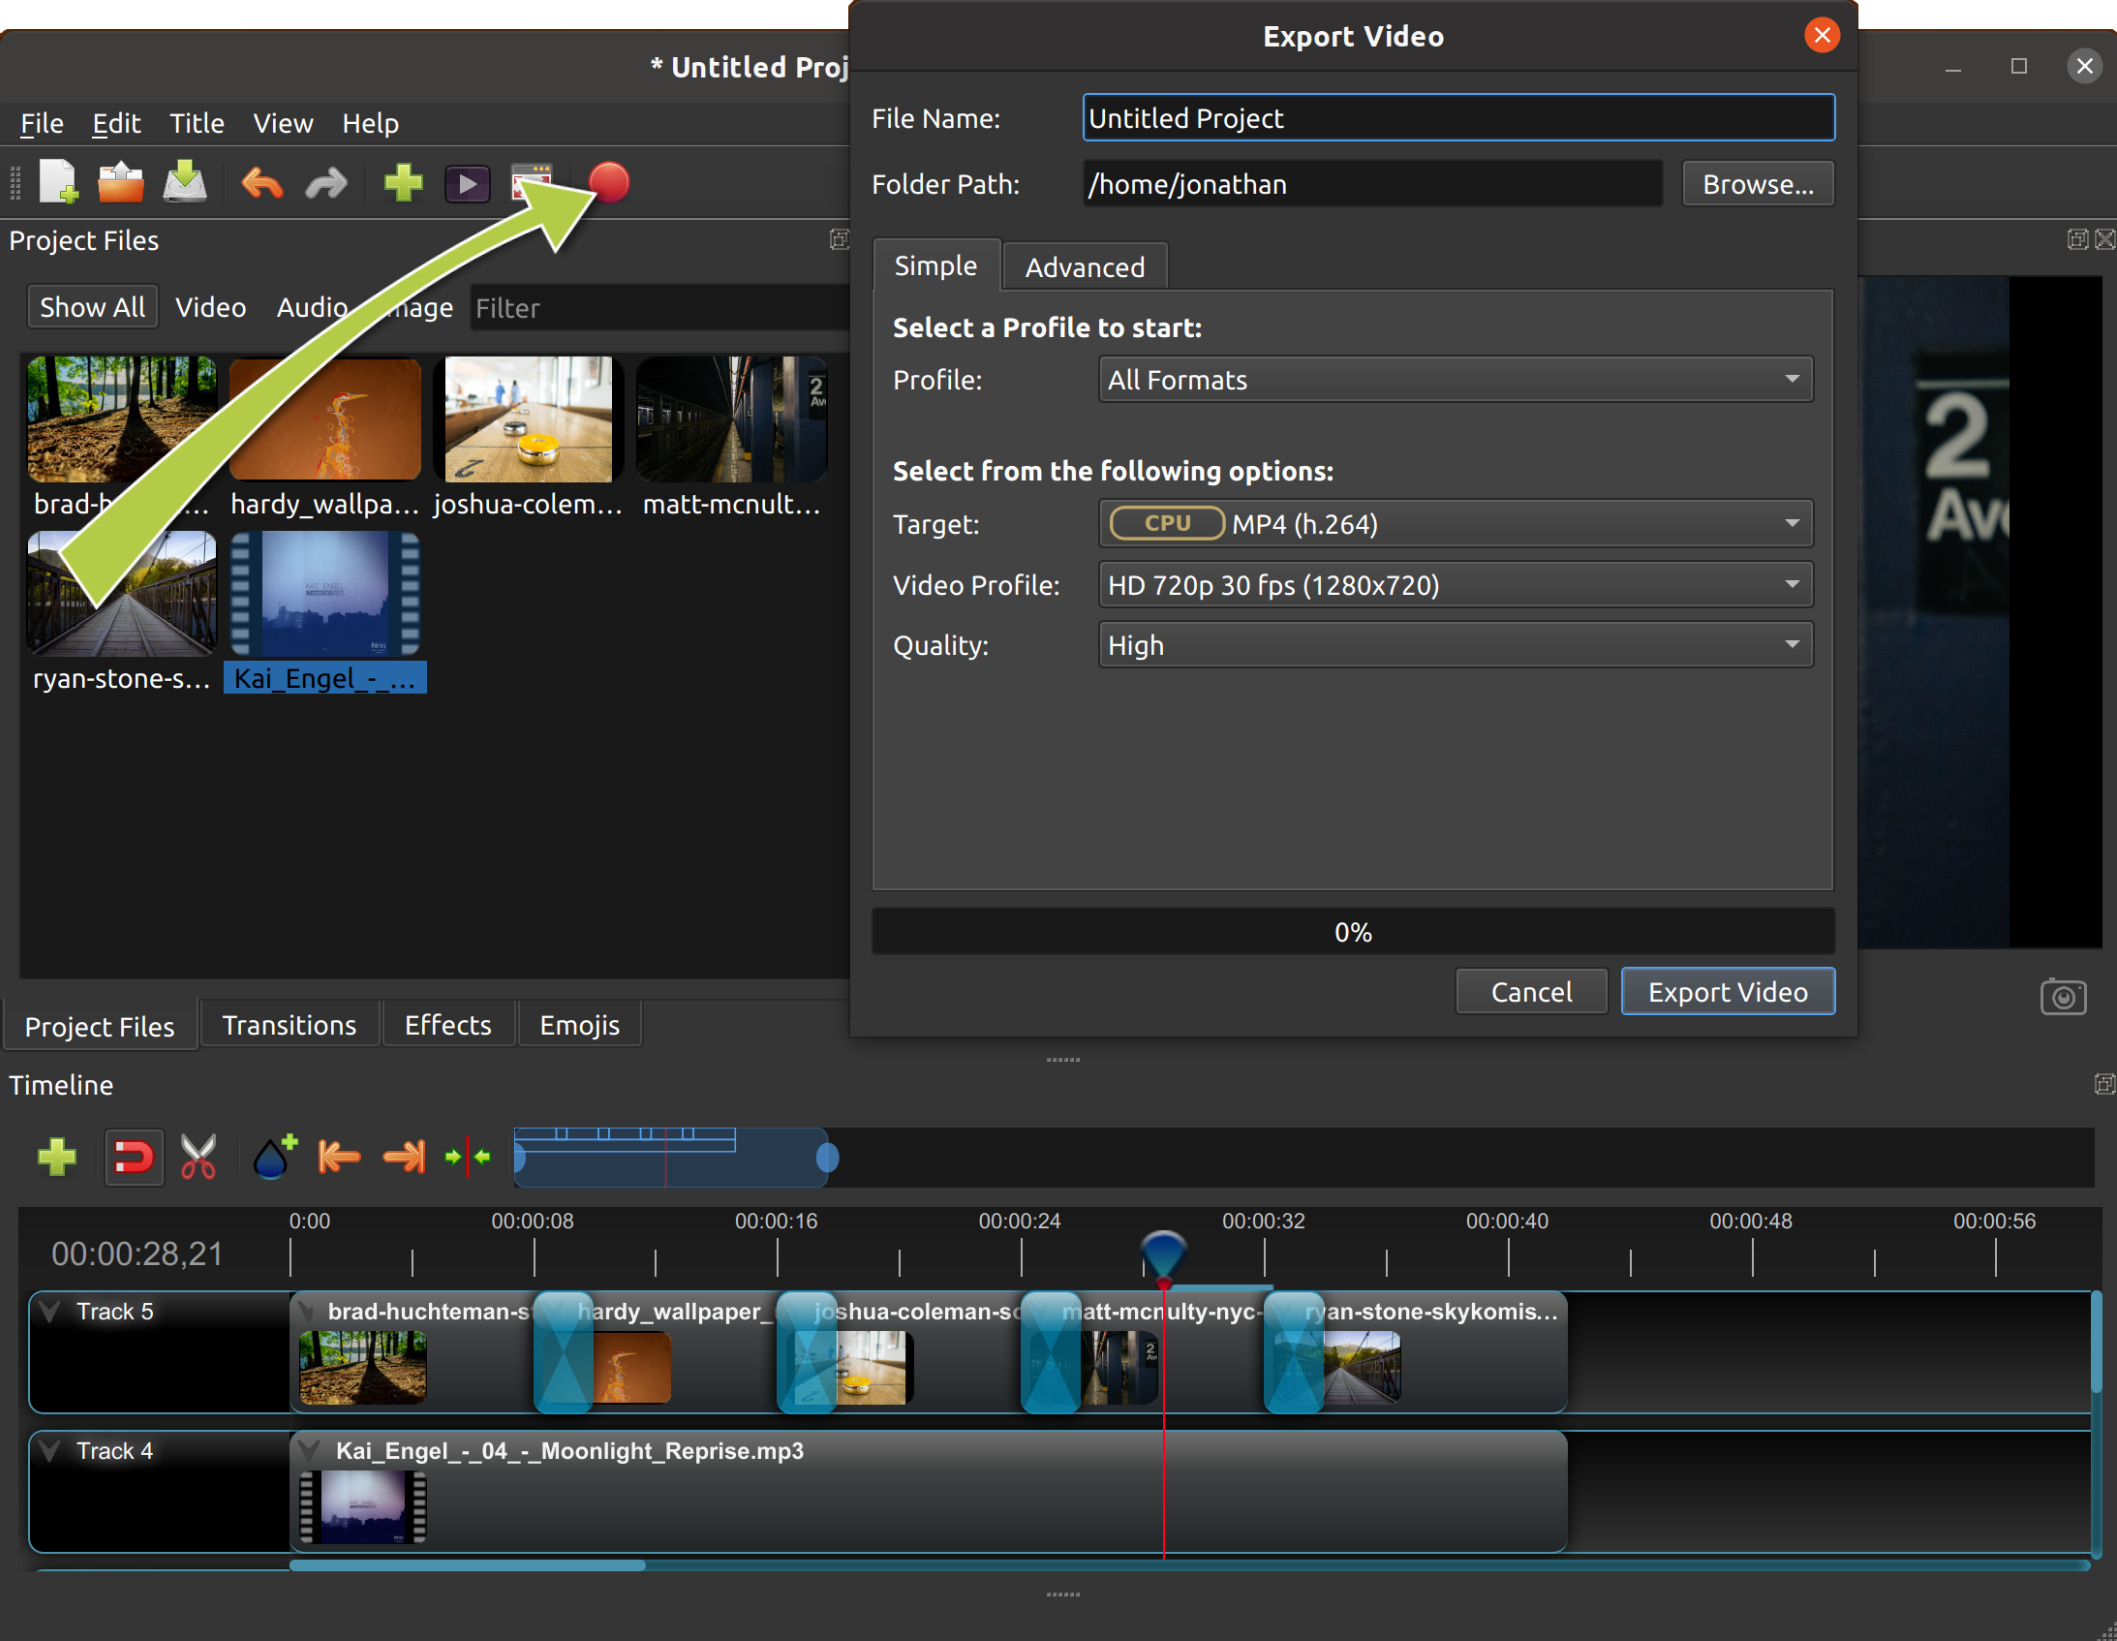 openshot video editor export video sound different